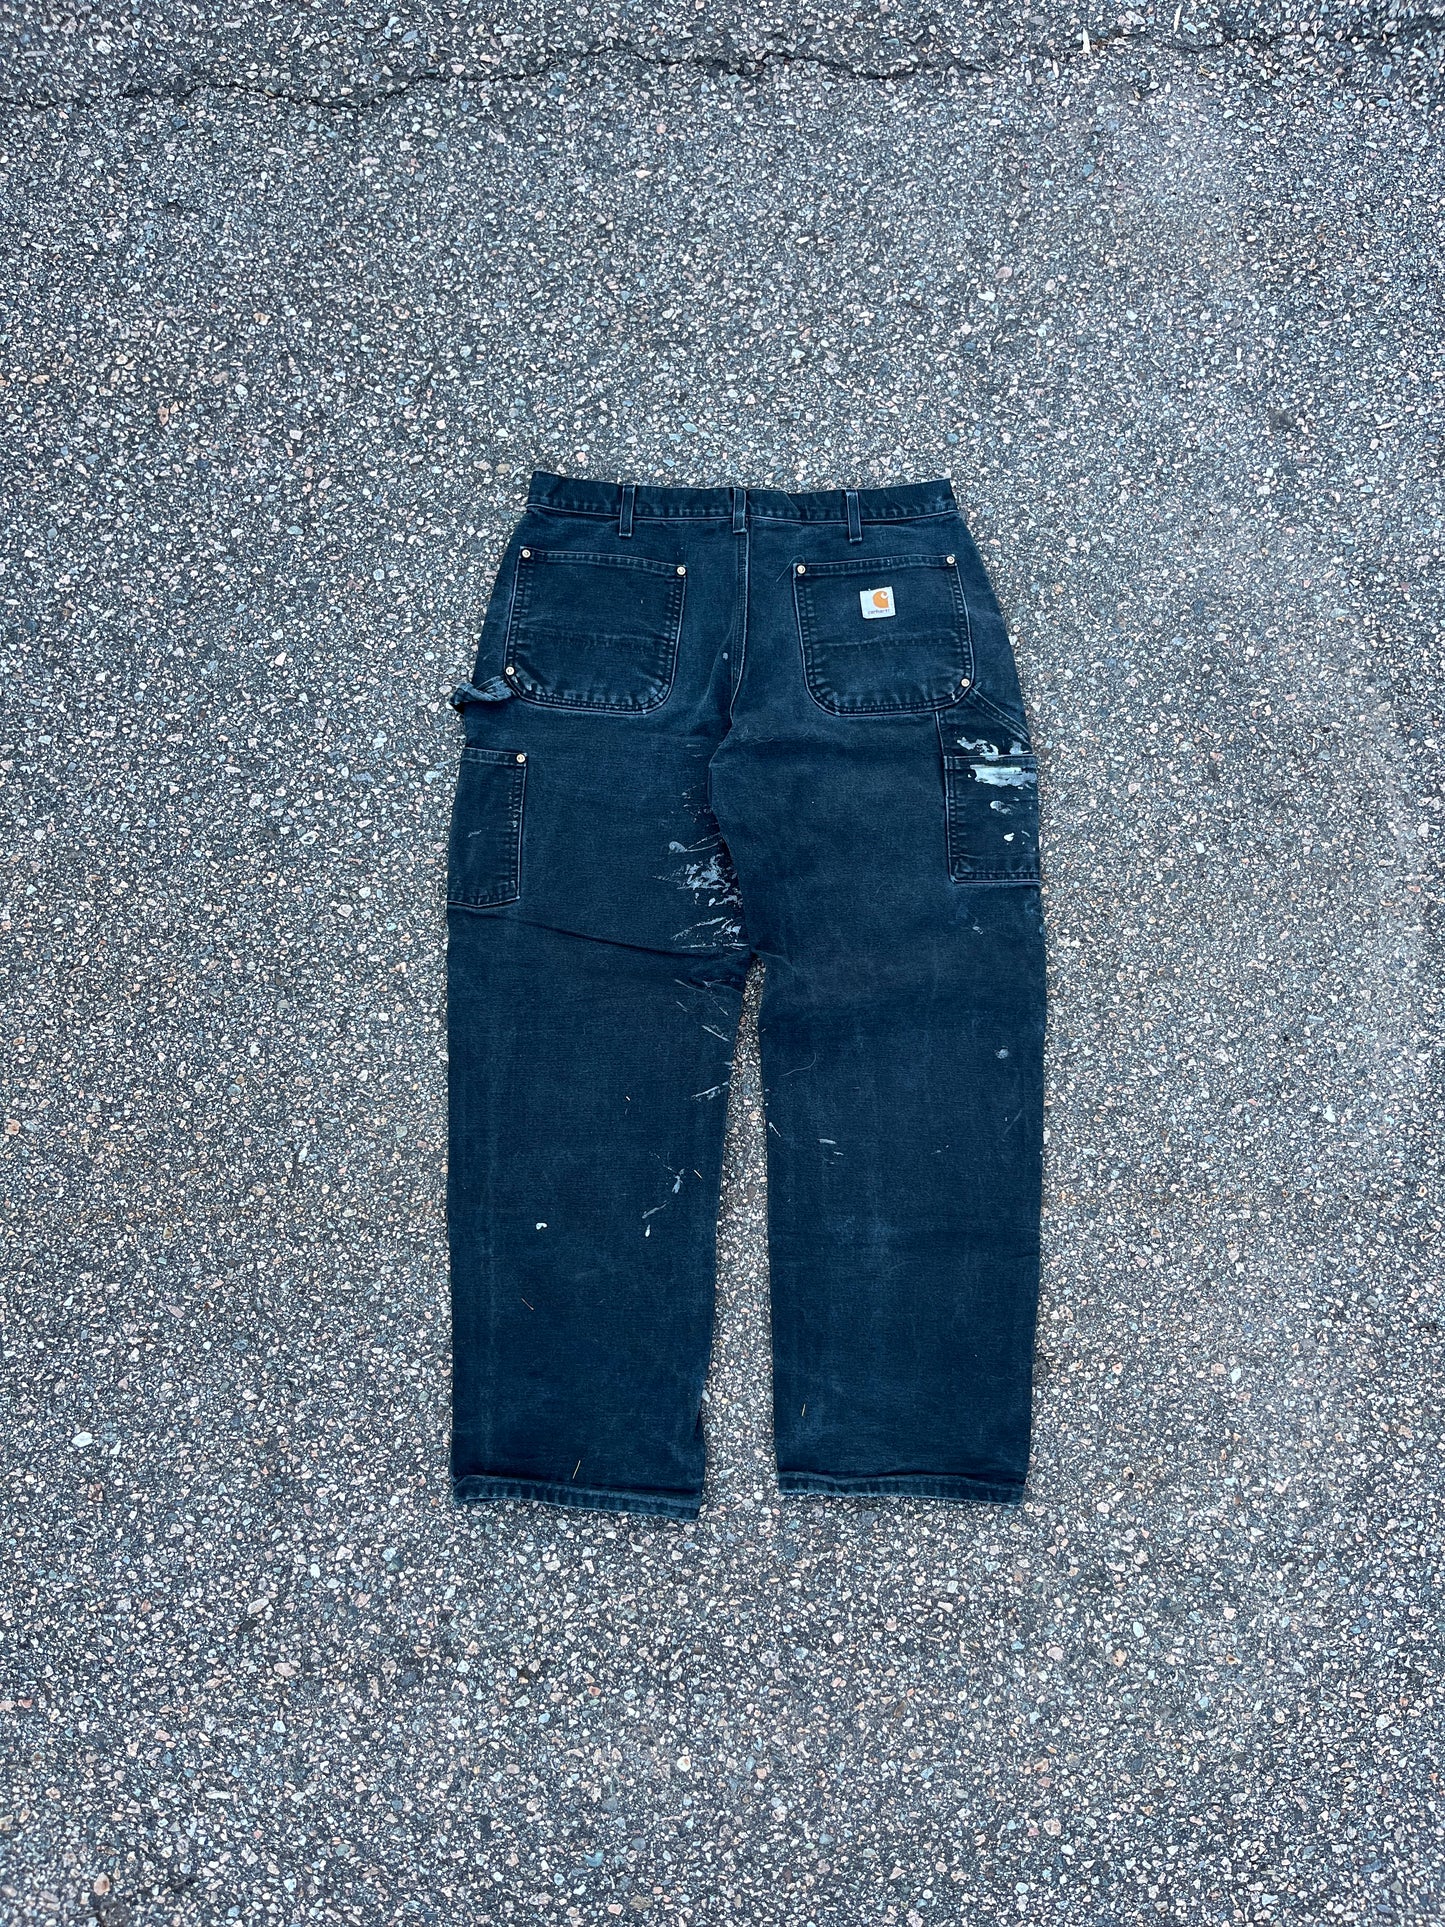 Faded n Painted Black Carhartt Double Knee Pants - 32 x 28.5